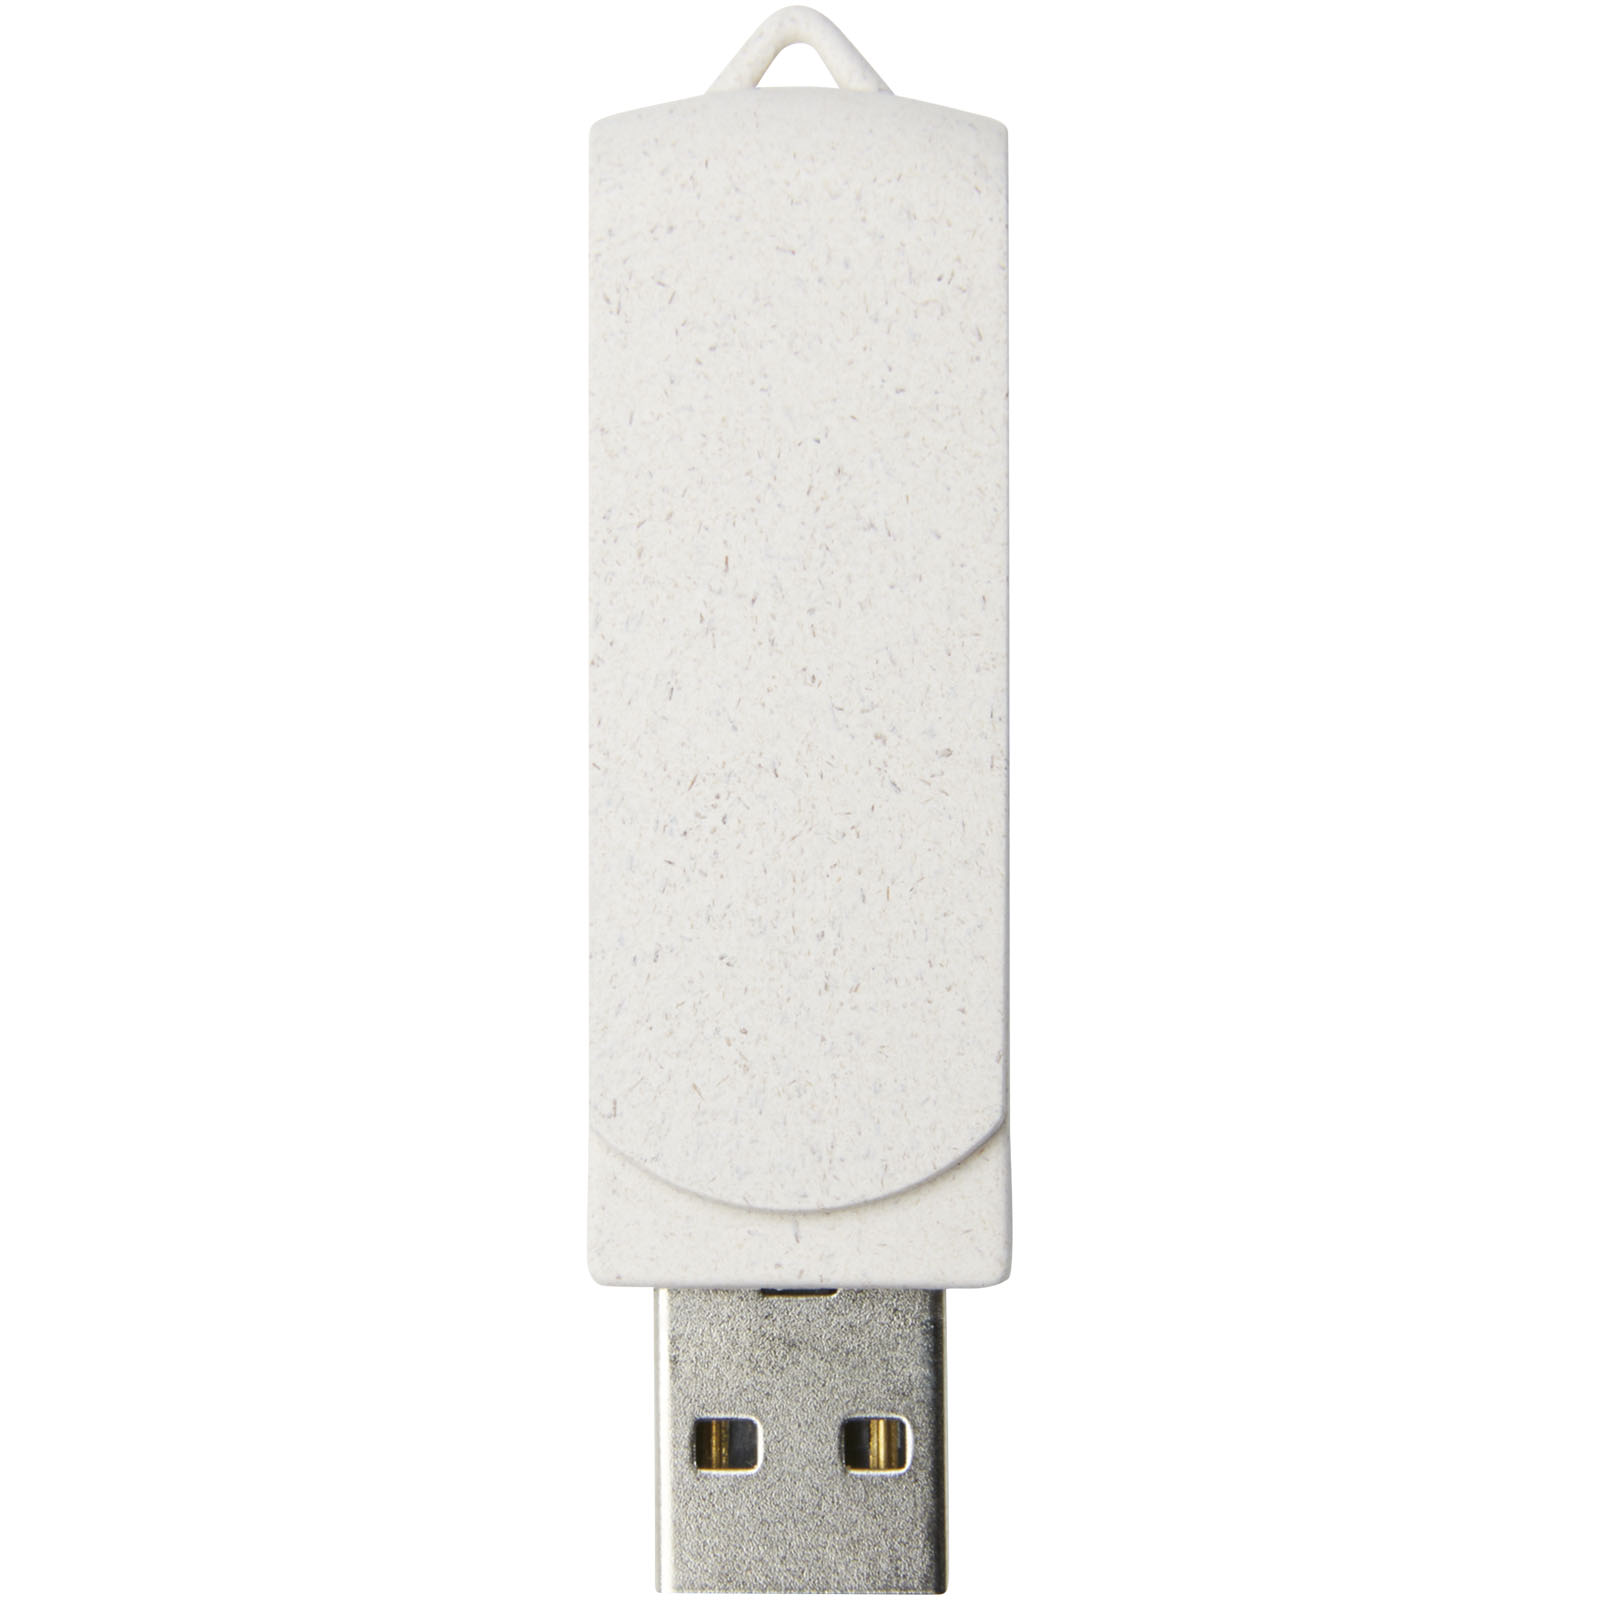 Advertising USB Flash Drives - Rotate 4GB wheat straw USB flash drive - 1